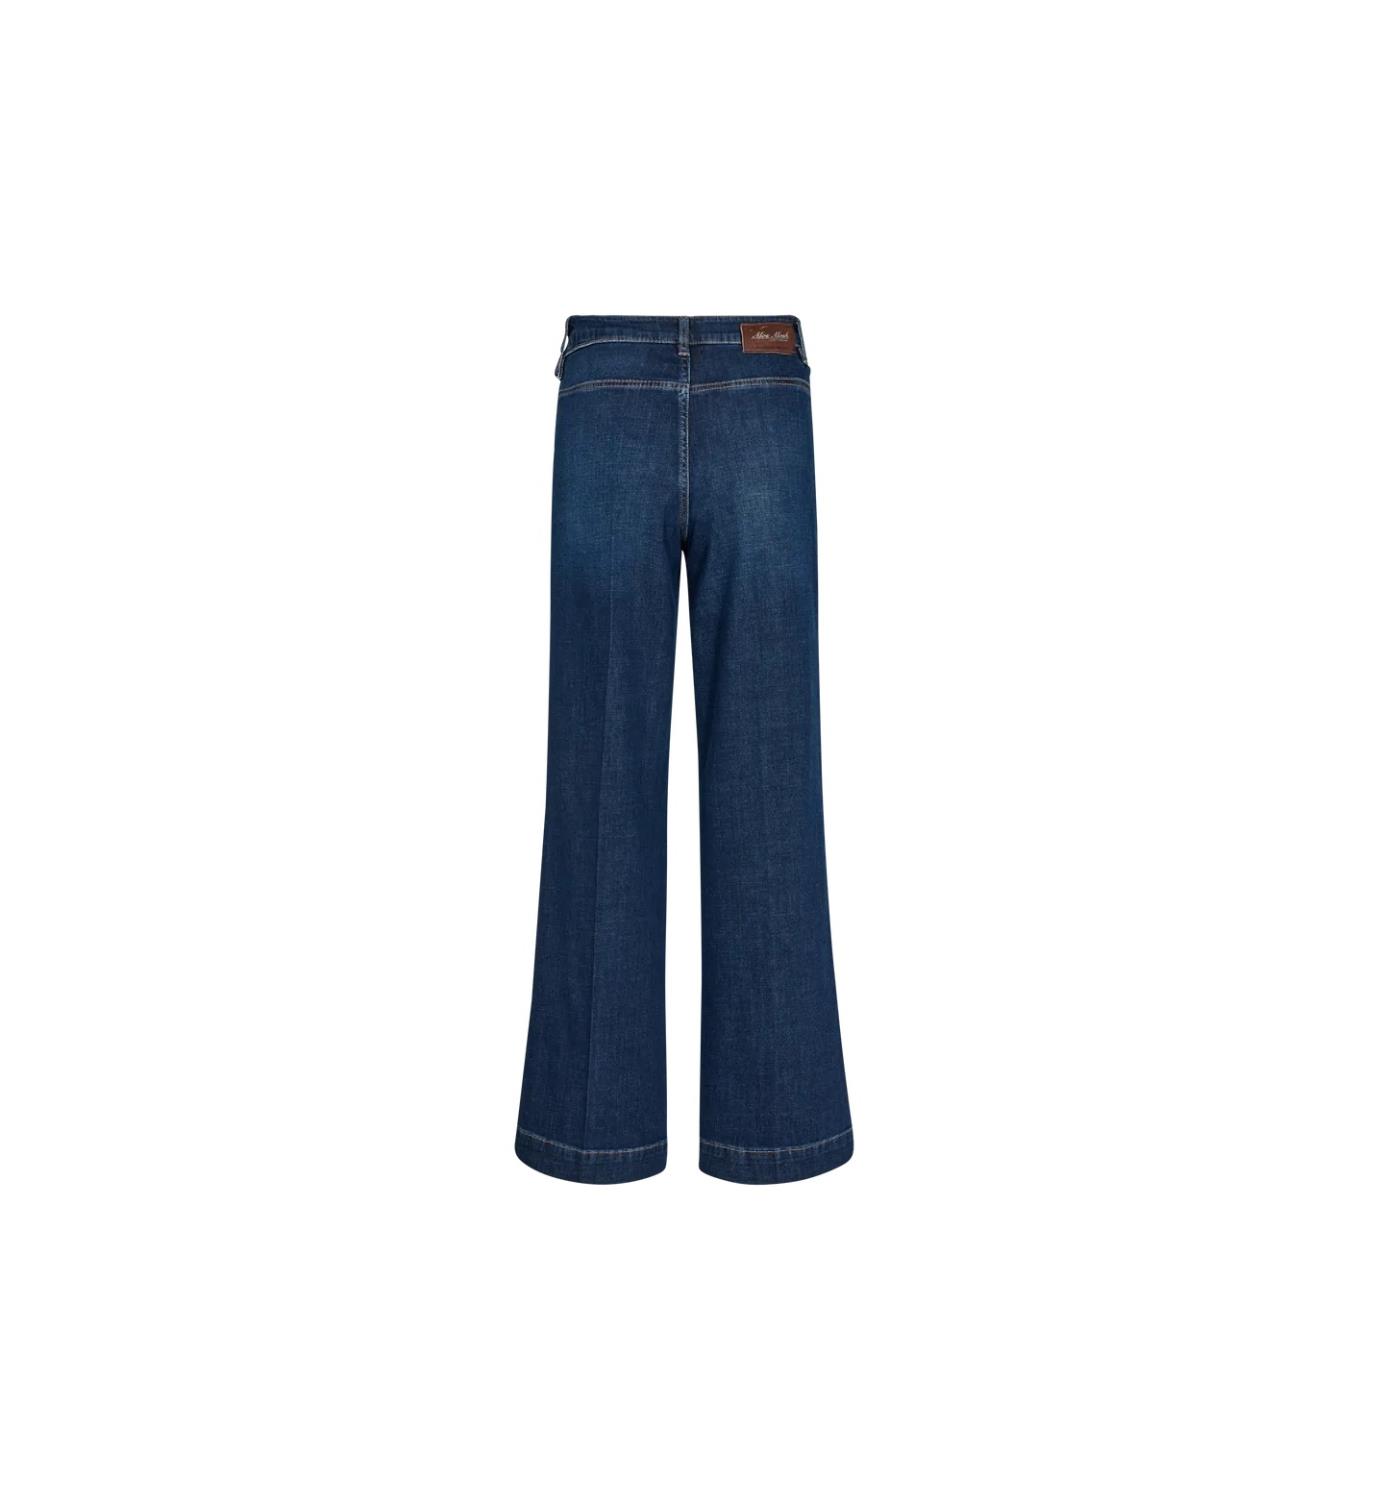 Mos mosh. Colette birkin jeans blue long